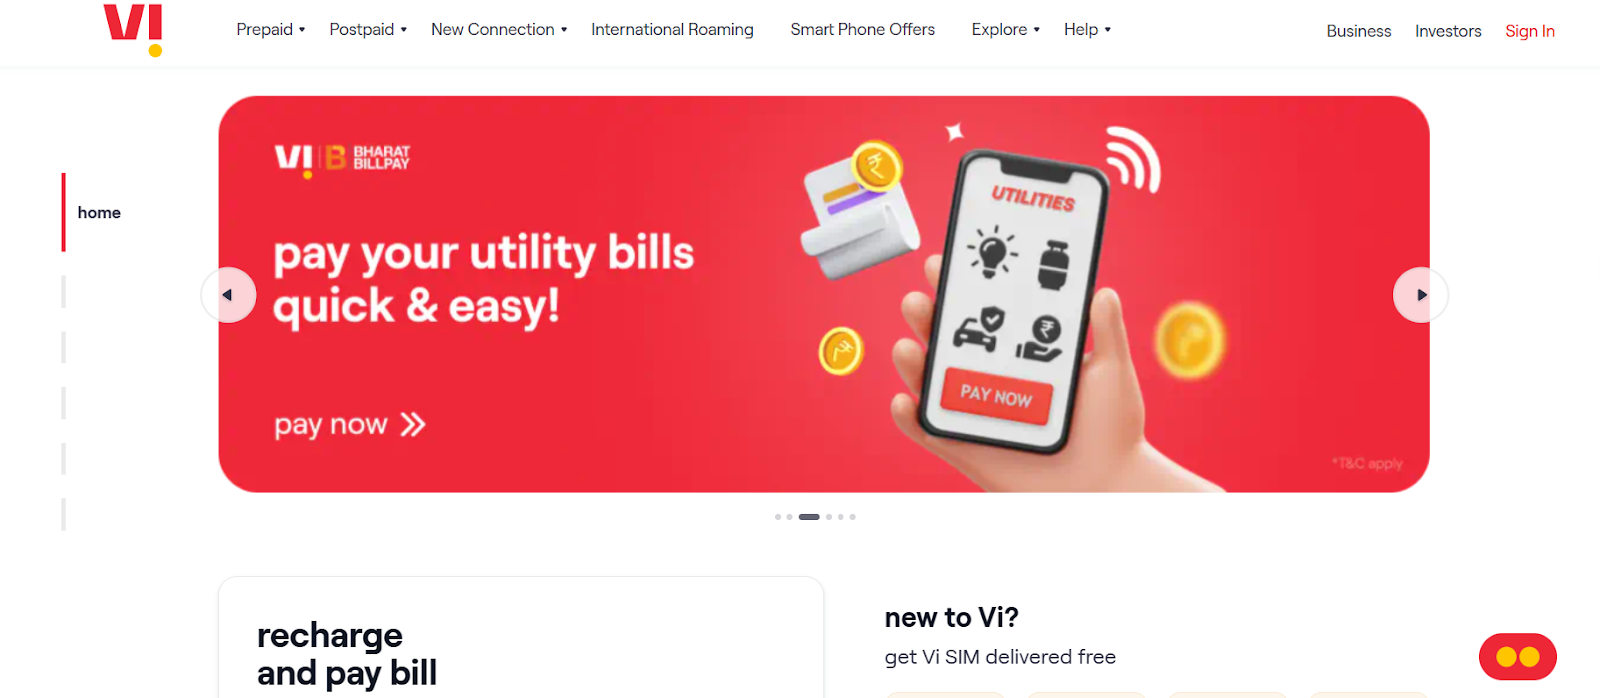 Vodafone Idea(Vi) website snapshot highlighting the services it provides.